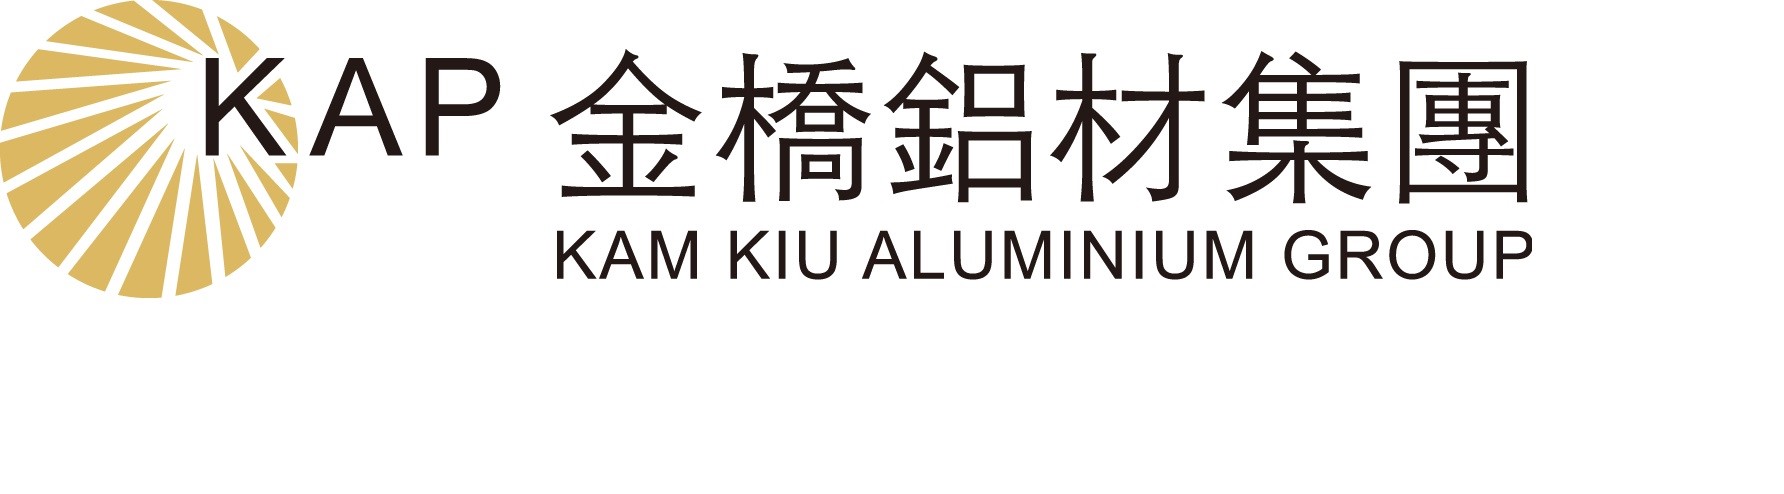 Kam Kiu Aluminium Products Group secures ASI Performance Standard certification